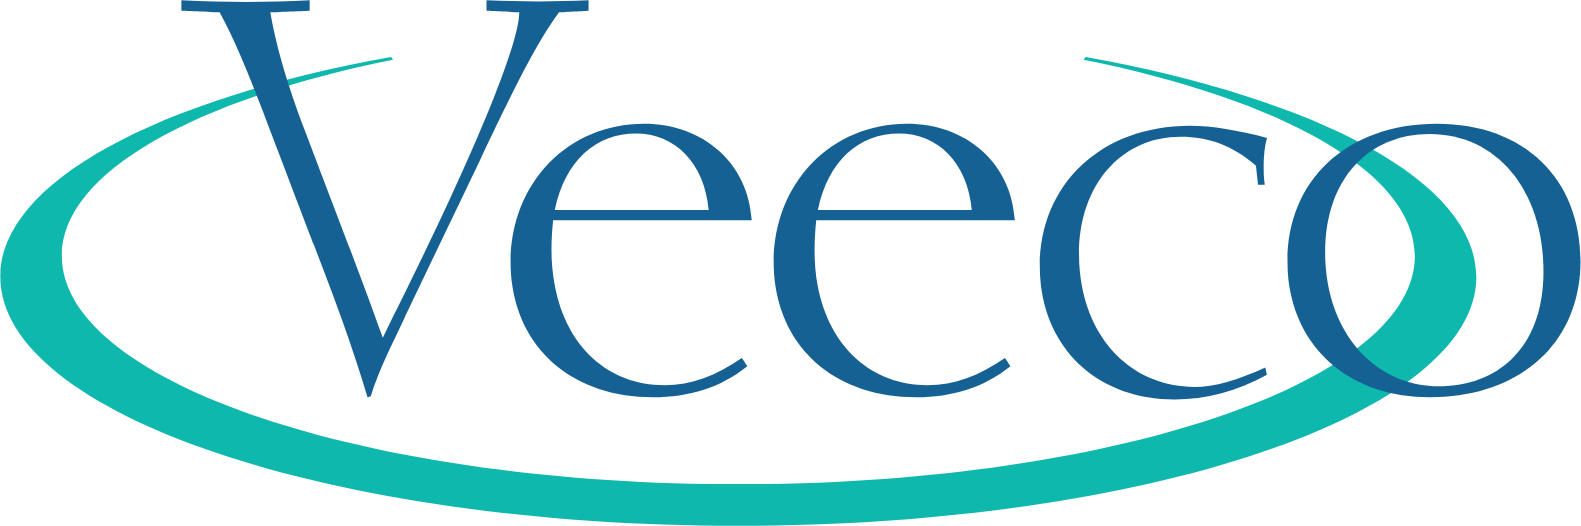 Veeco
 logo (PNG transparent)